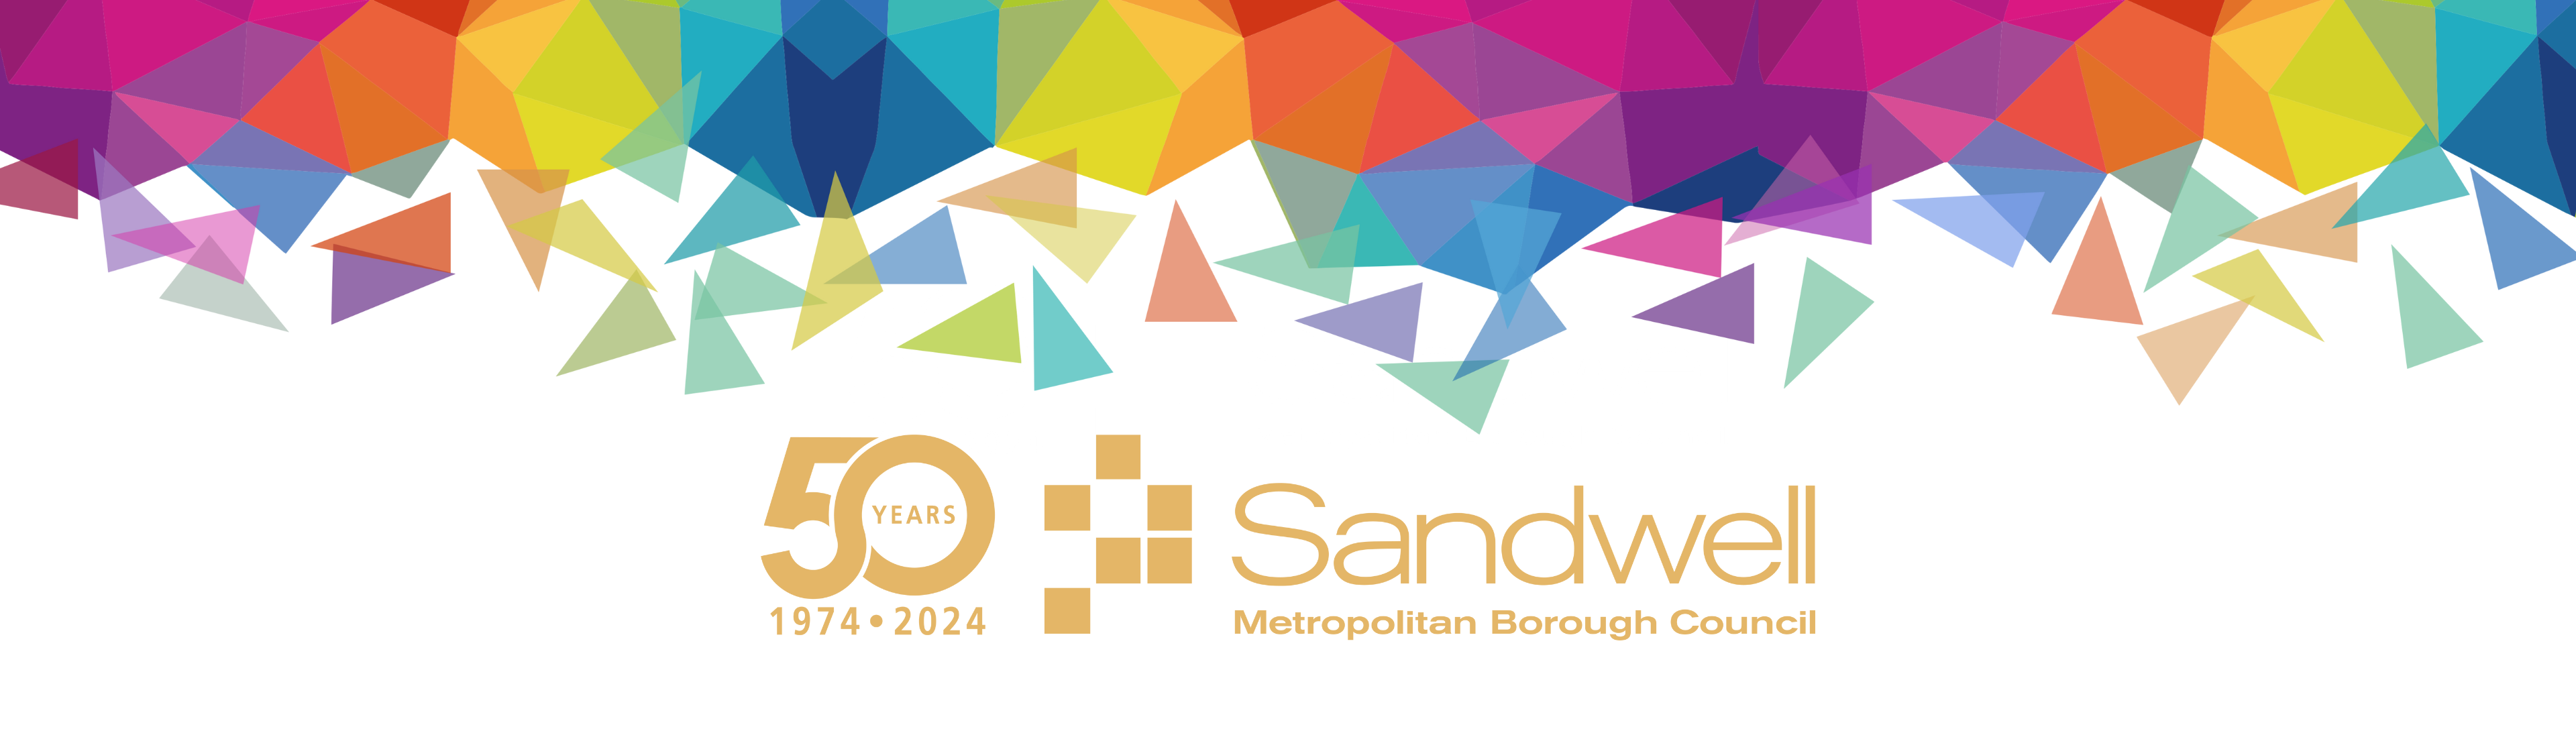 RESIZED CS website - Sandwell 50th anniversary (3840 x 2160) (3840 x 1090 px)